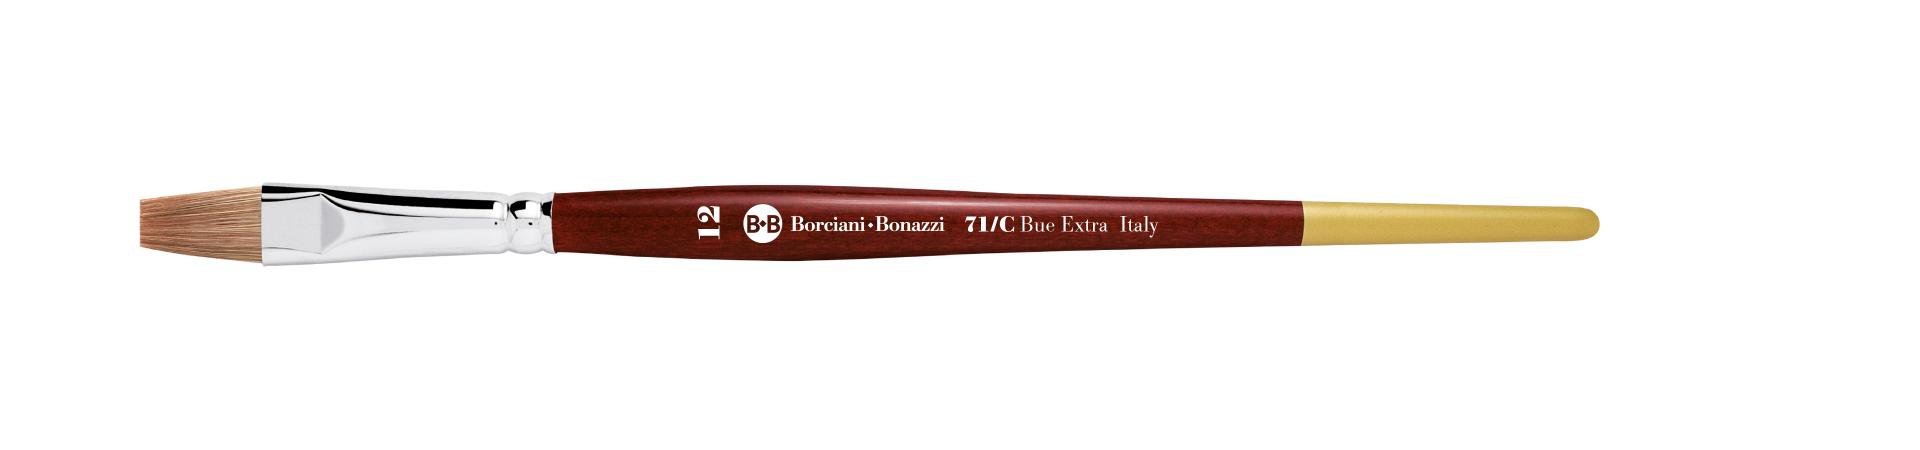 Ox Brushes for watercolor paintings - Borciani e Bonazzi